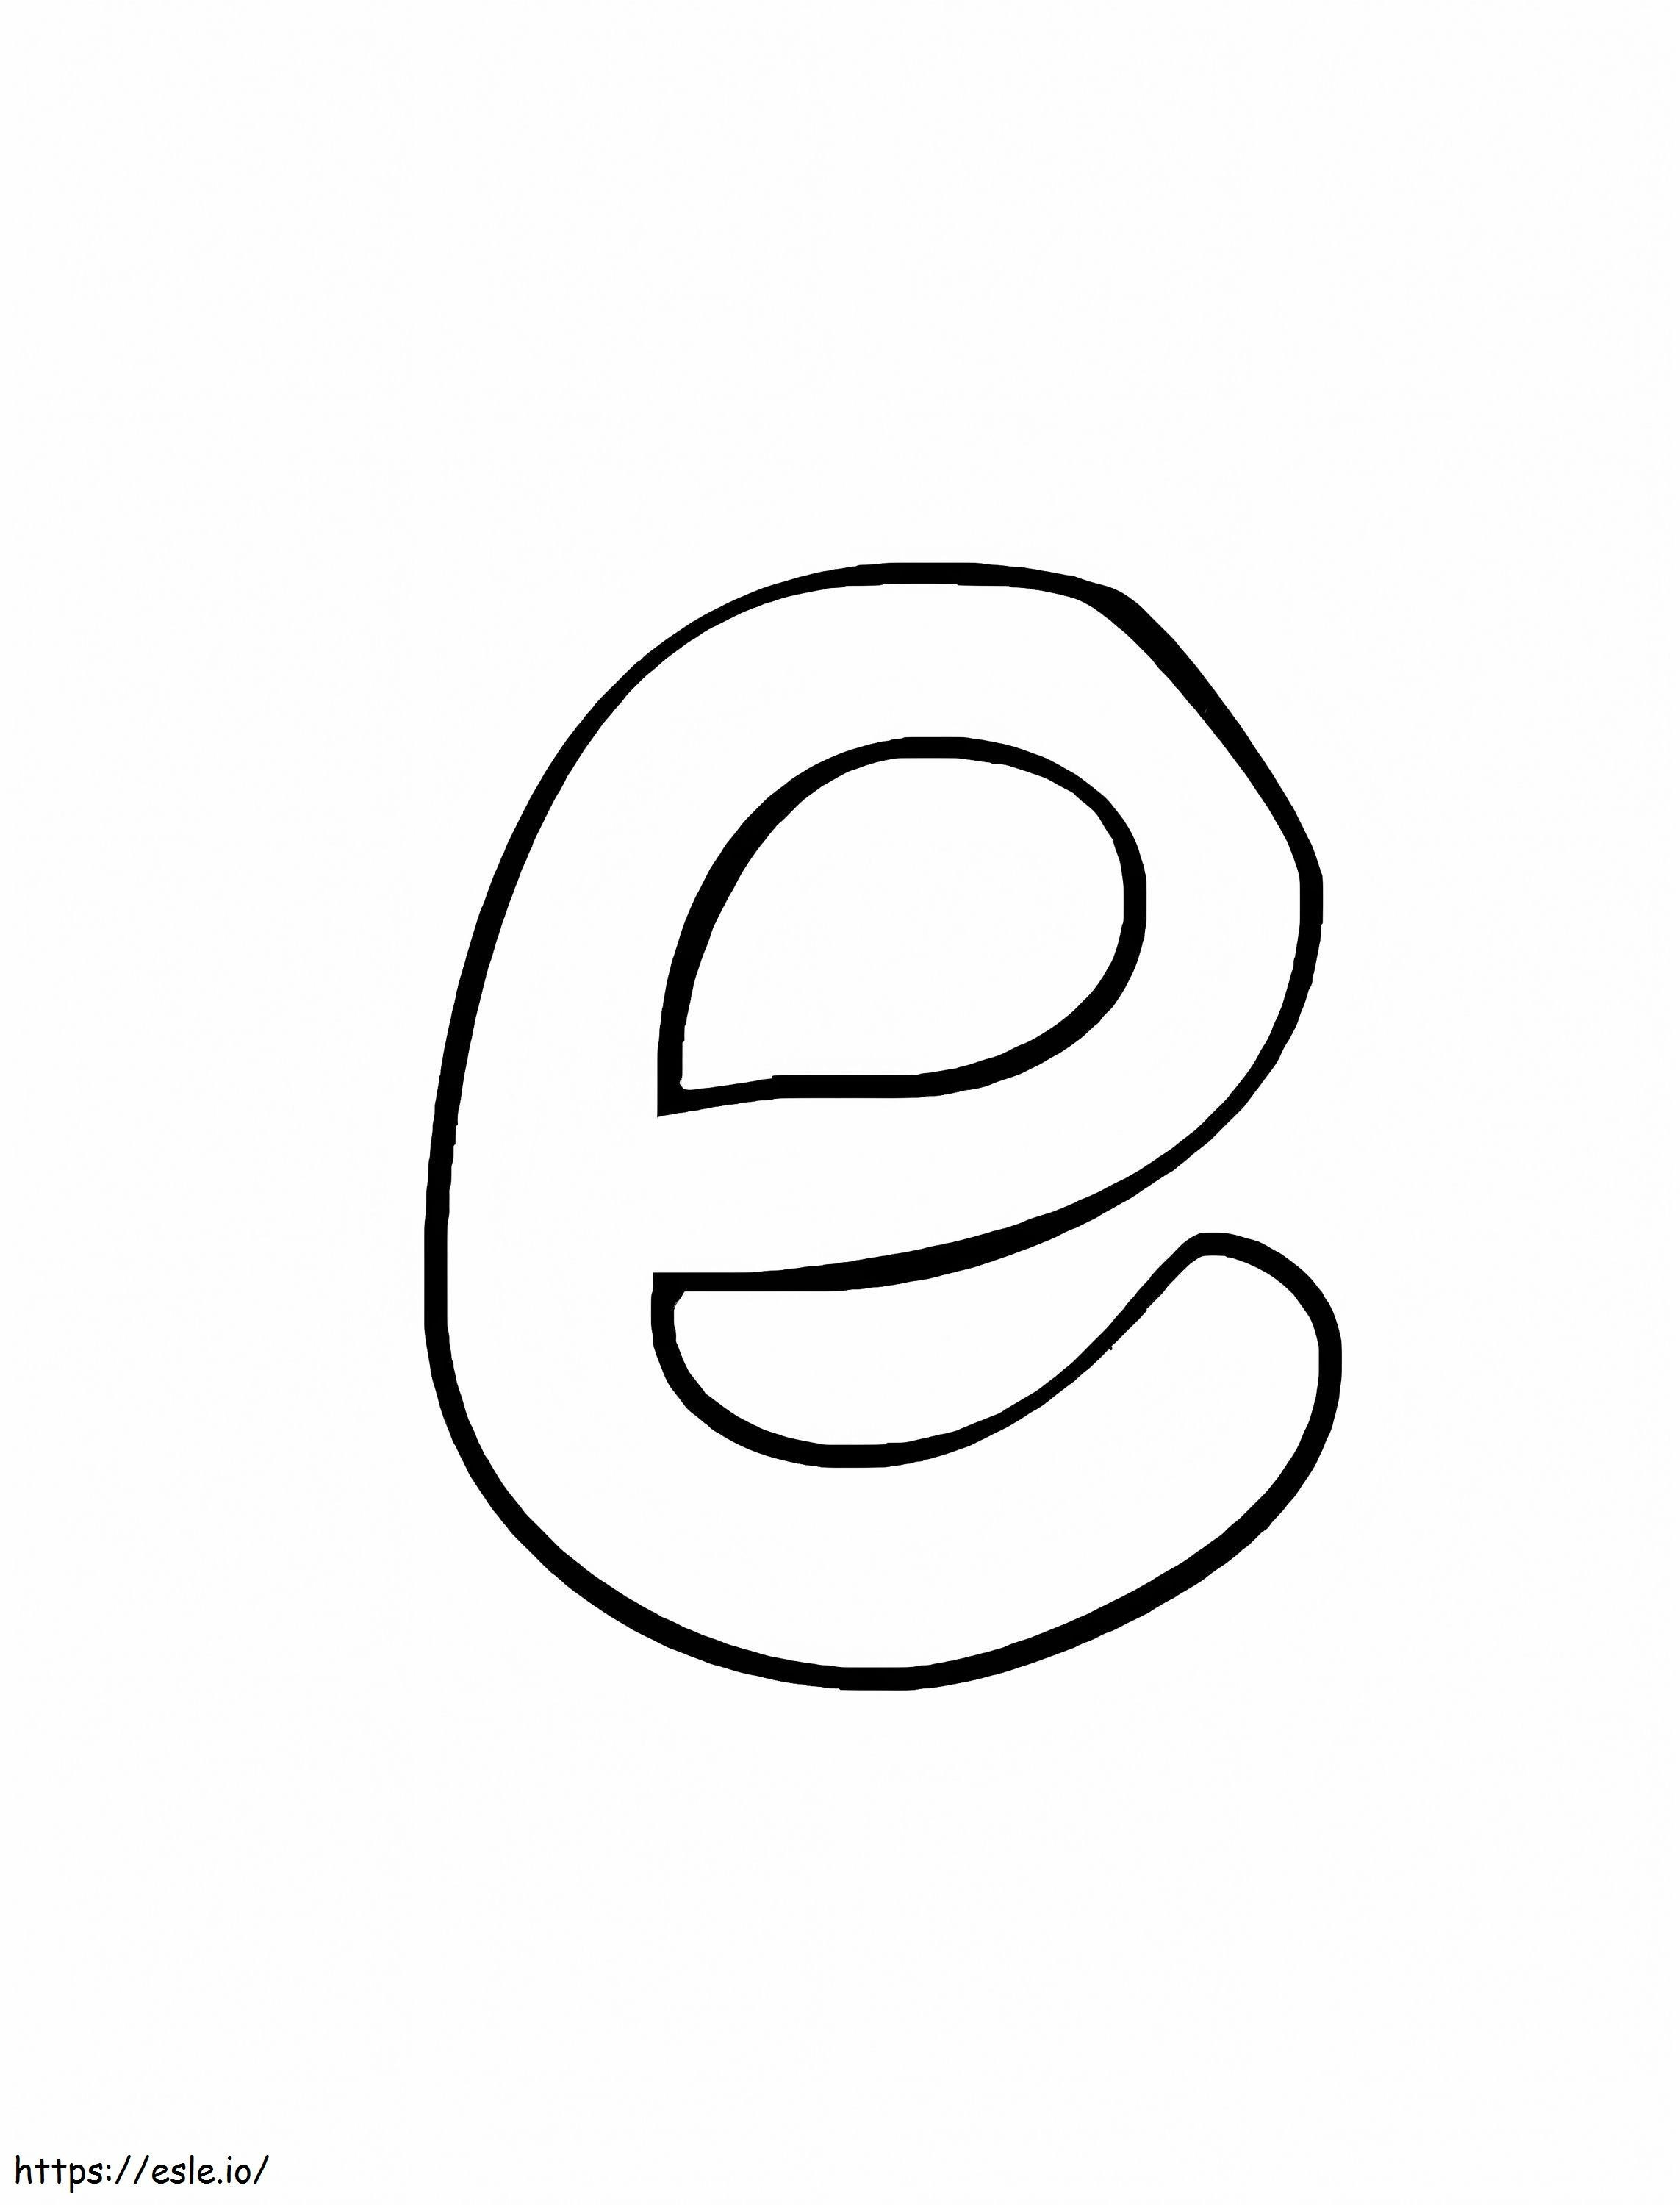 Litera E 1 kolorowanka